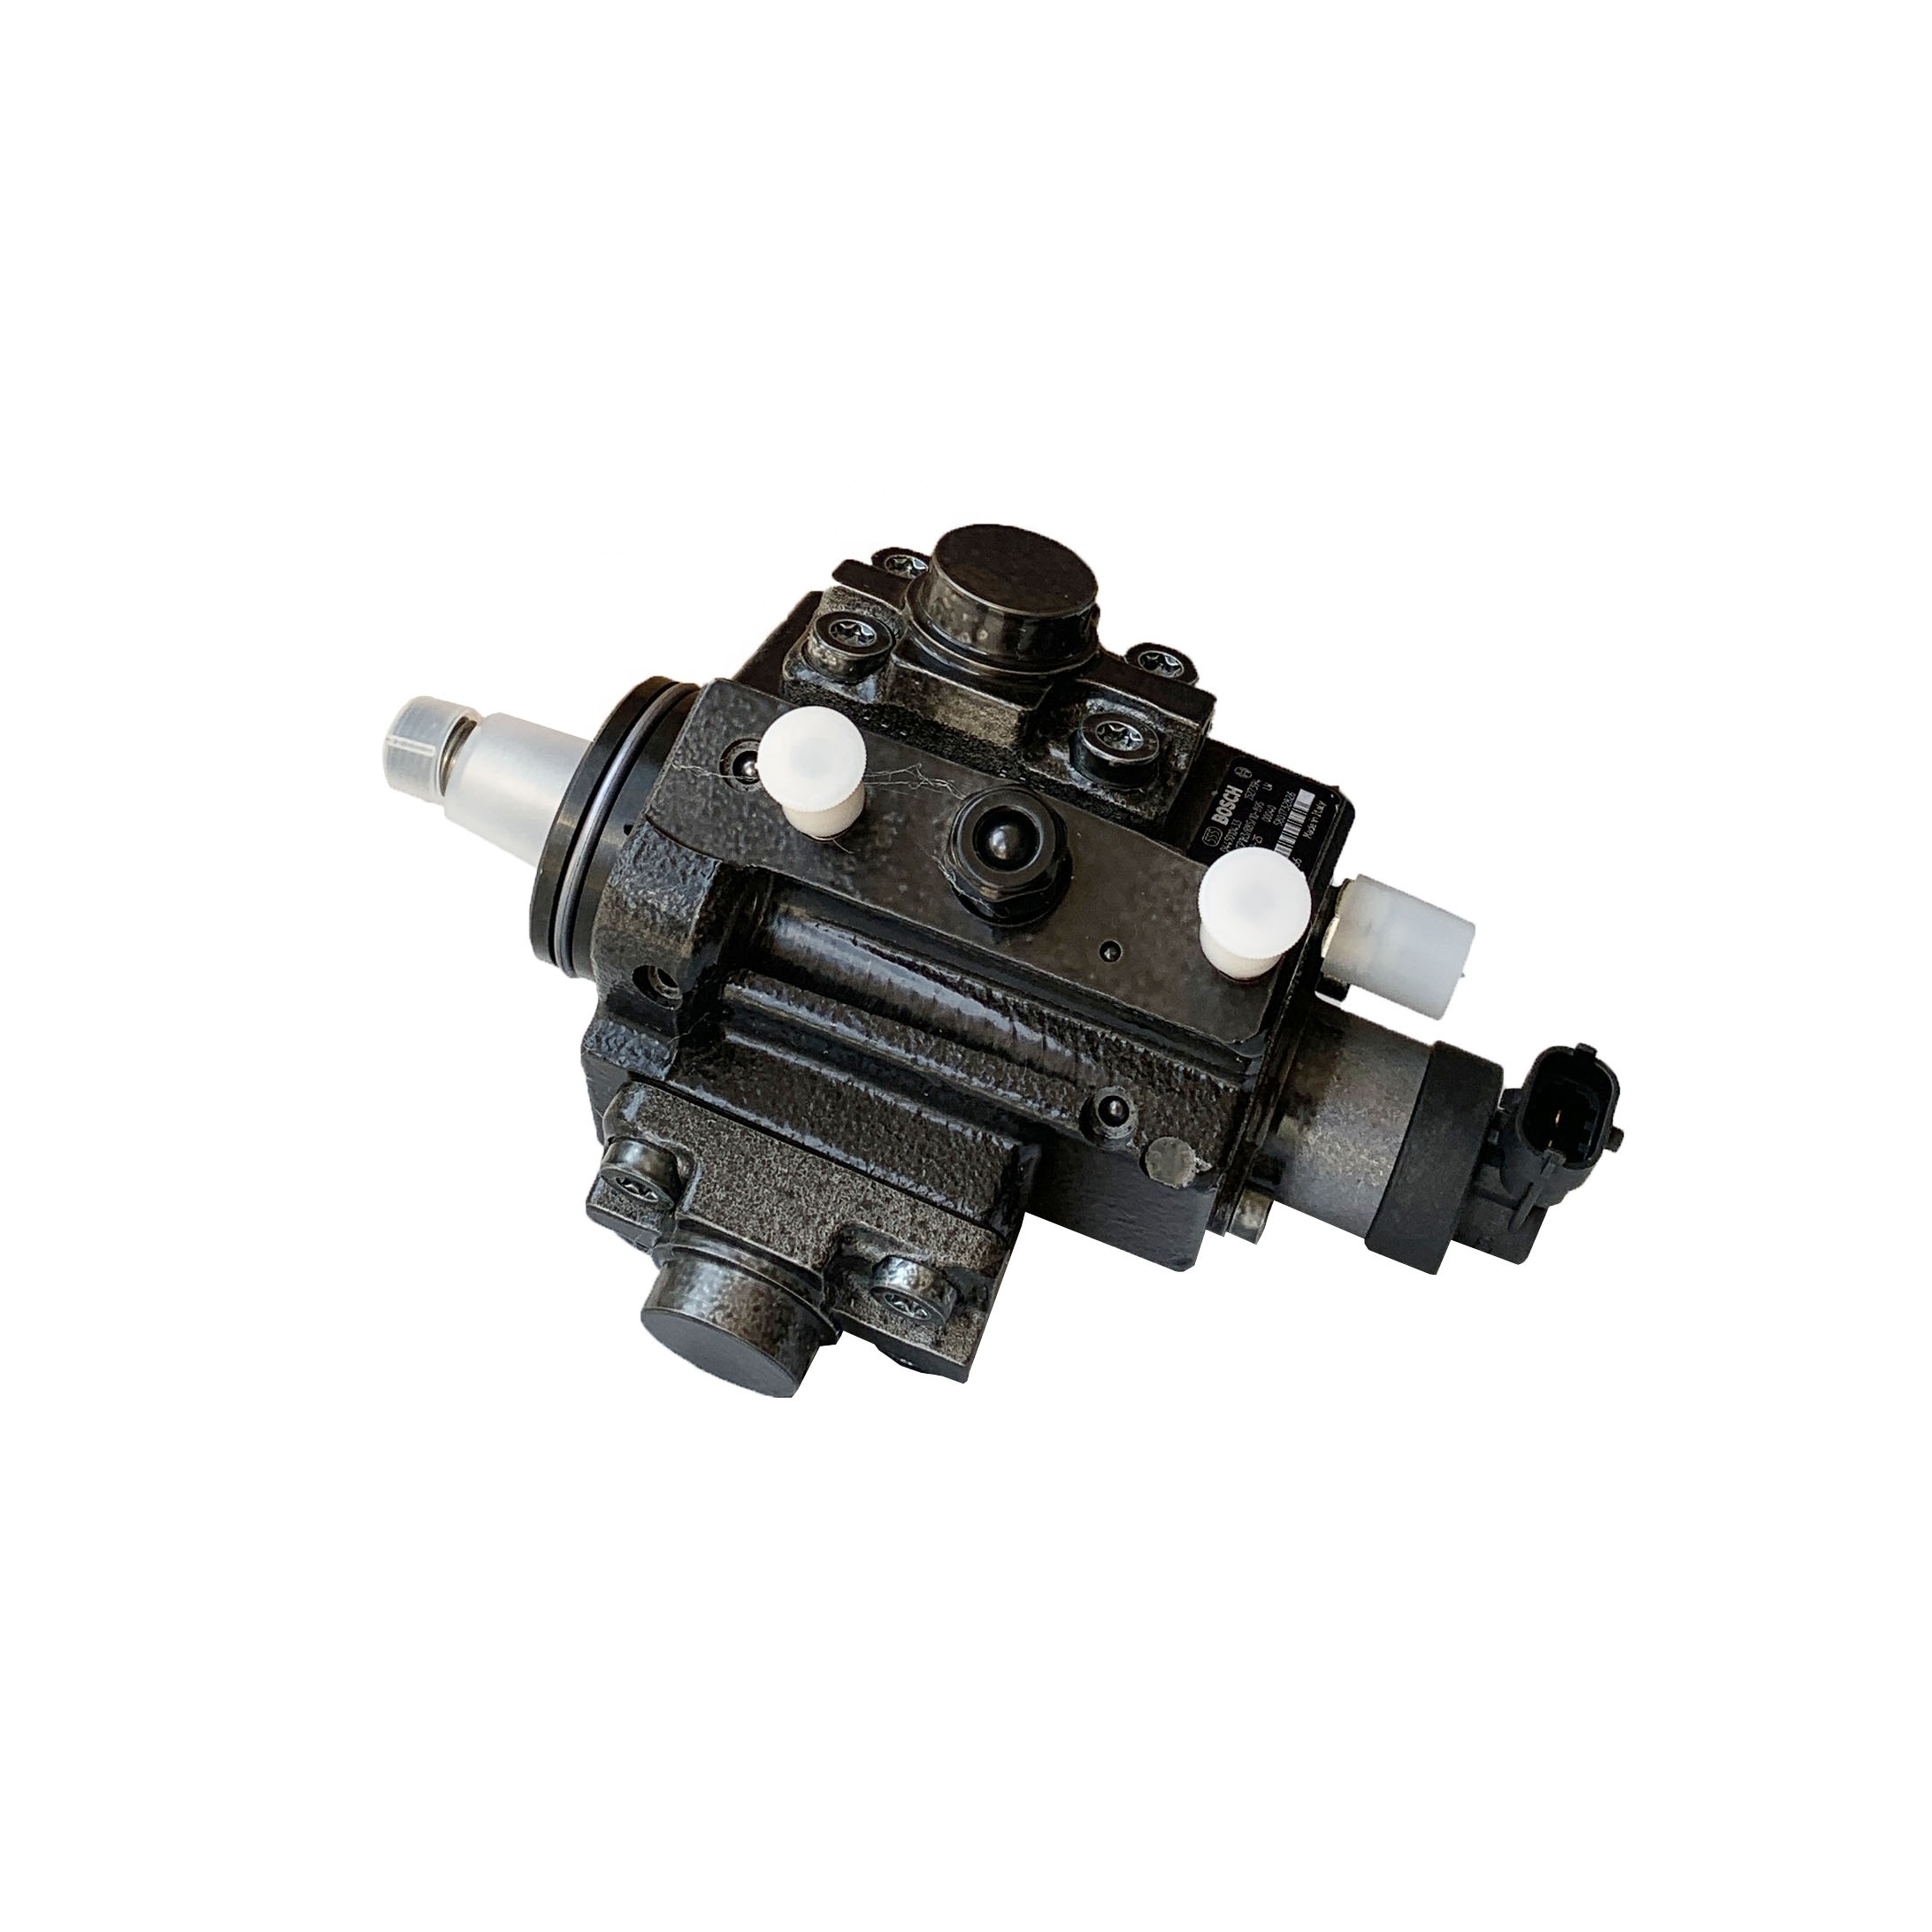 Diesel Engine Fuel Injection Pump Parts Fuel Injection Pumps 0445010433 0445010320 0445010199